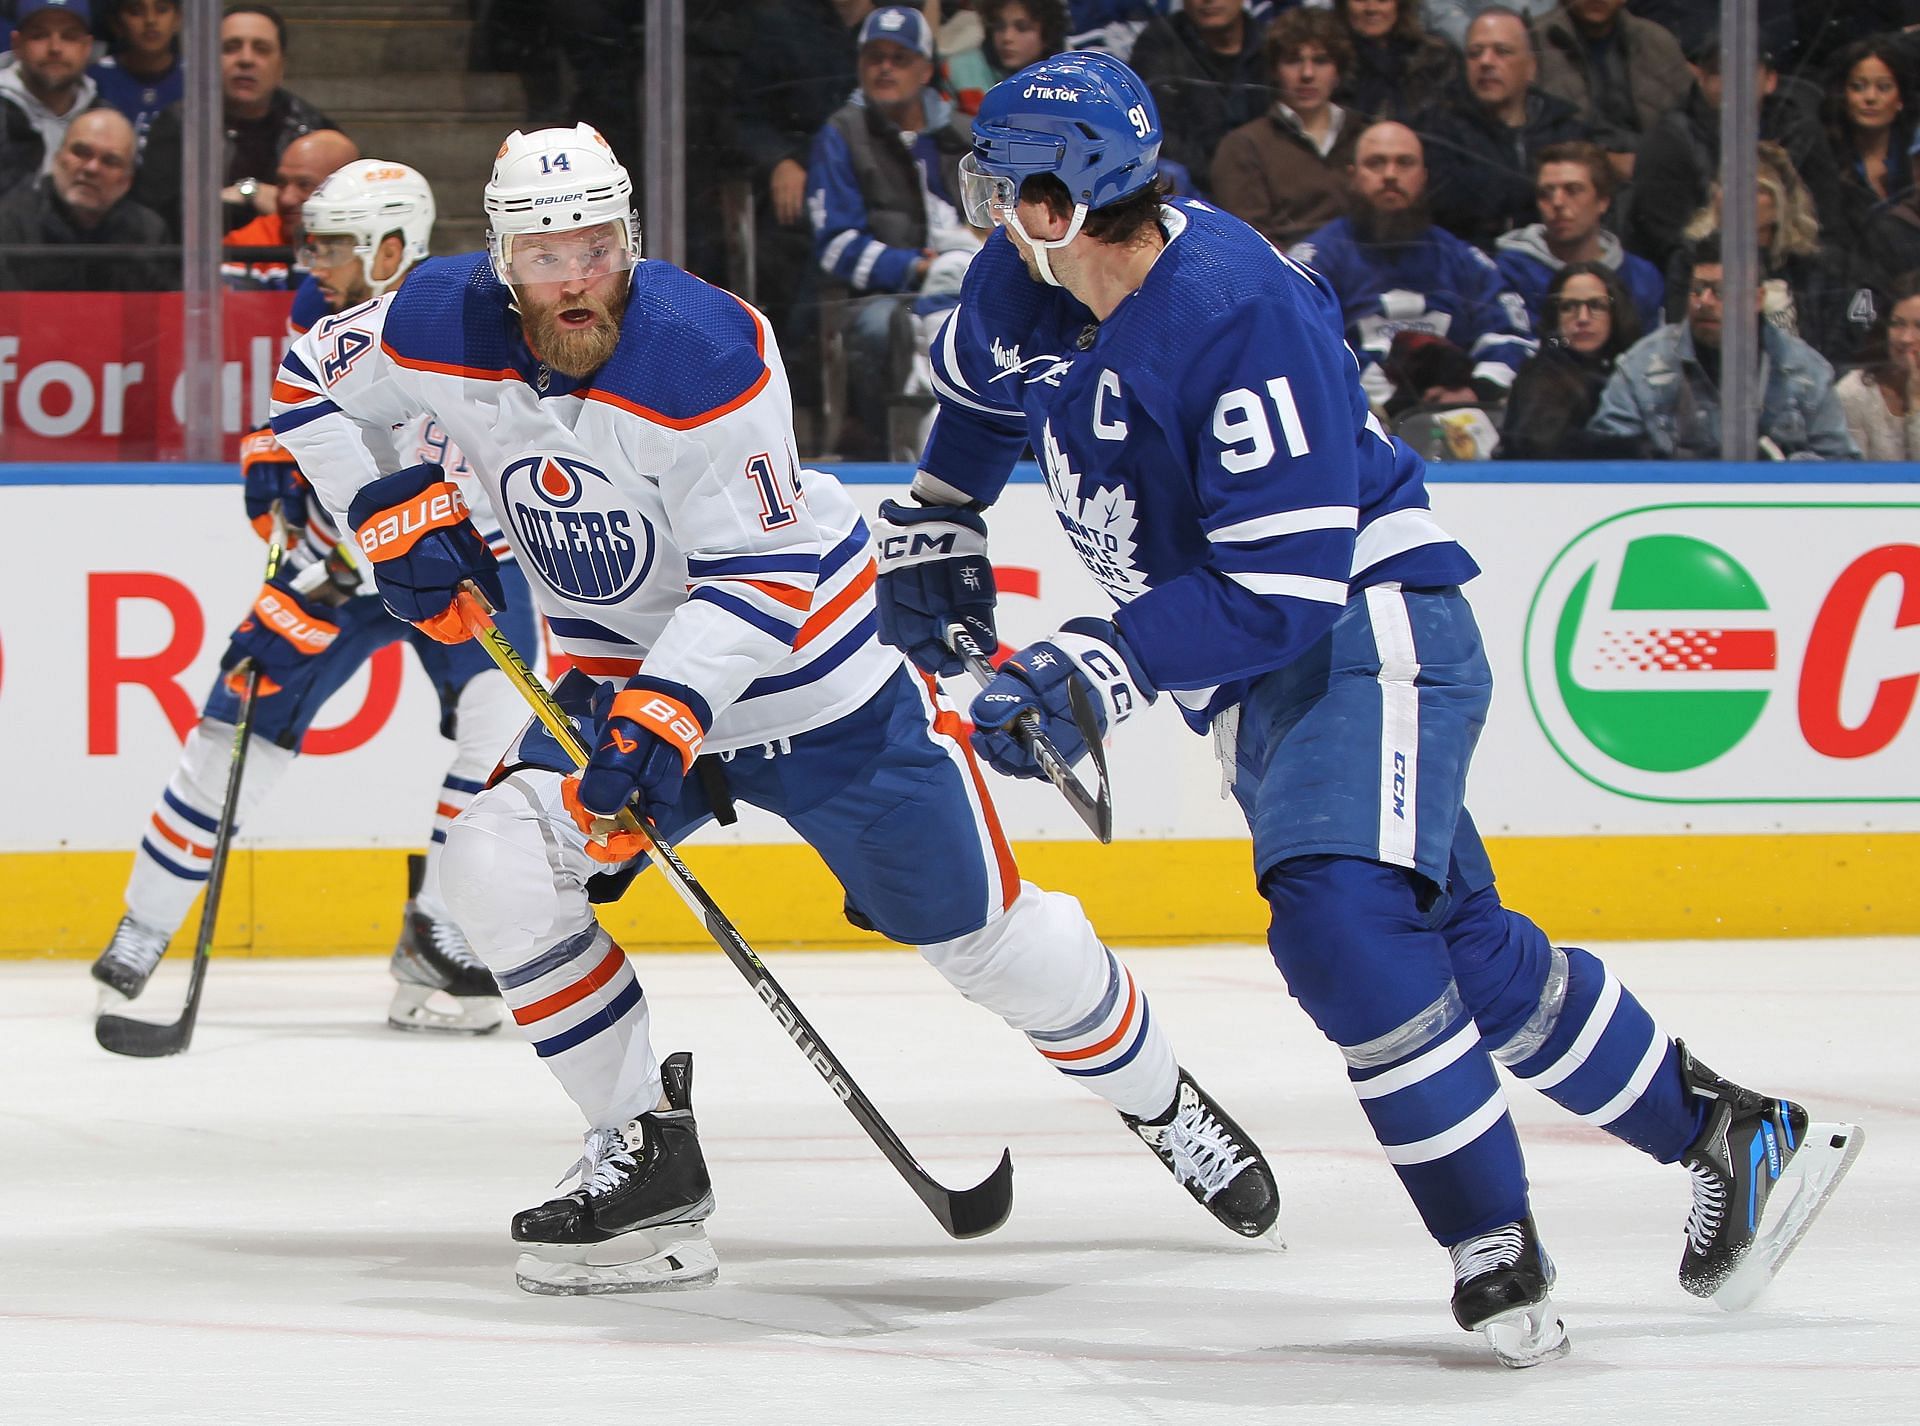 John Tavares fined: Toronto Maple Leafs forward fined $5,000 for slashing Vincent Desharnais